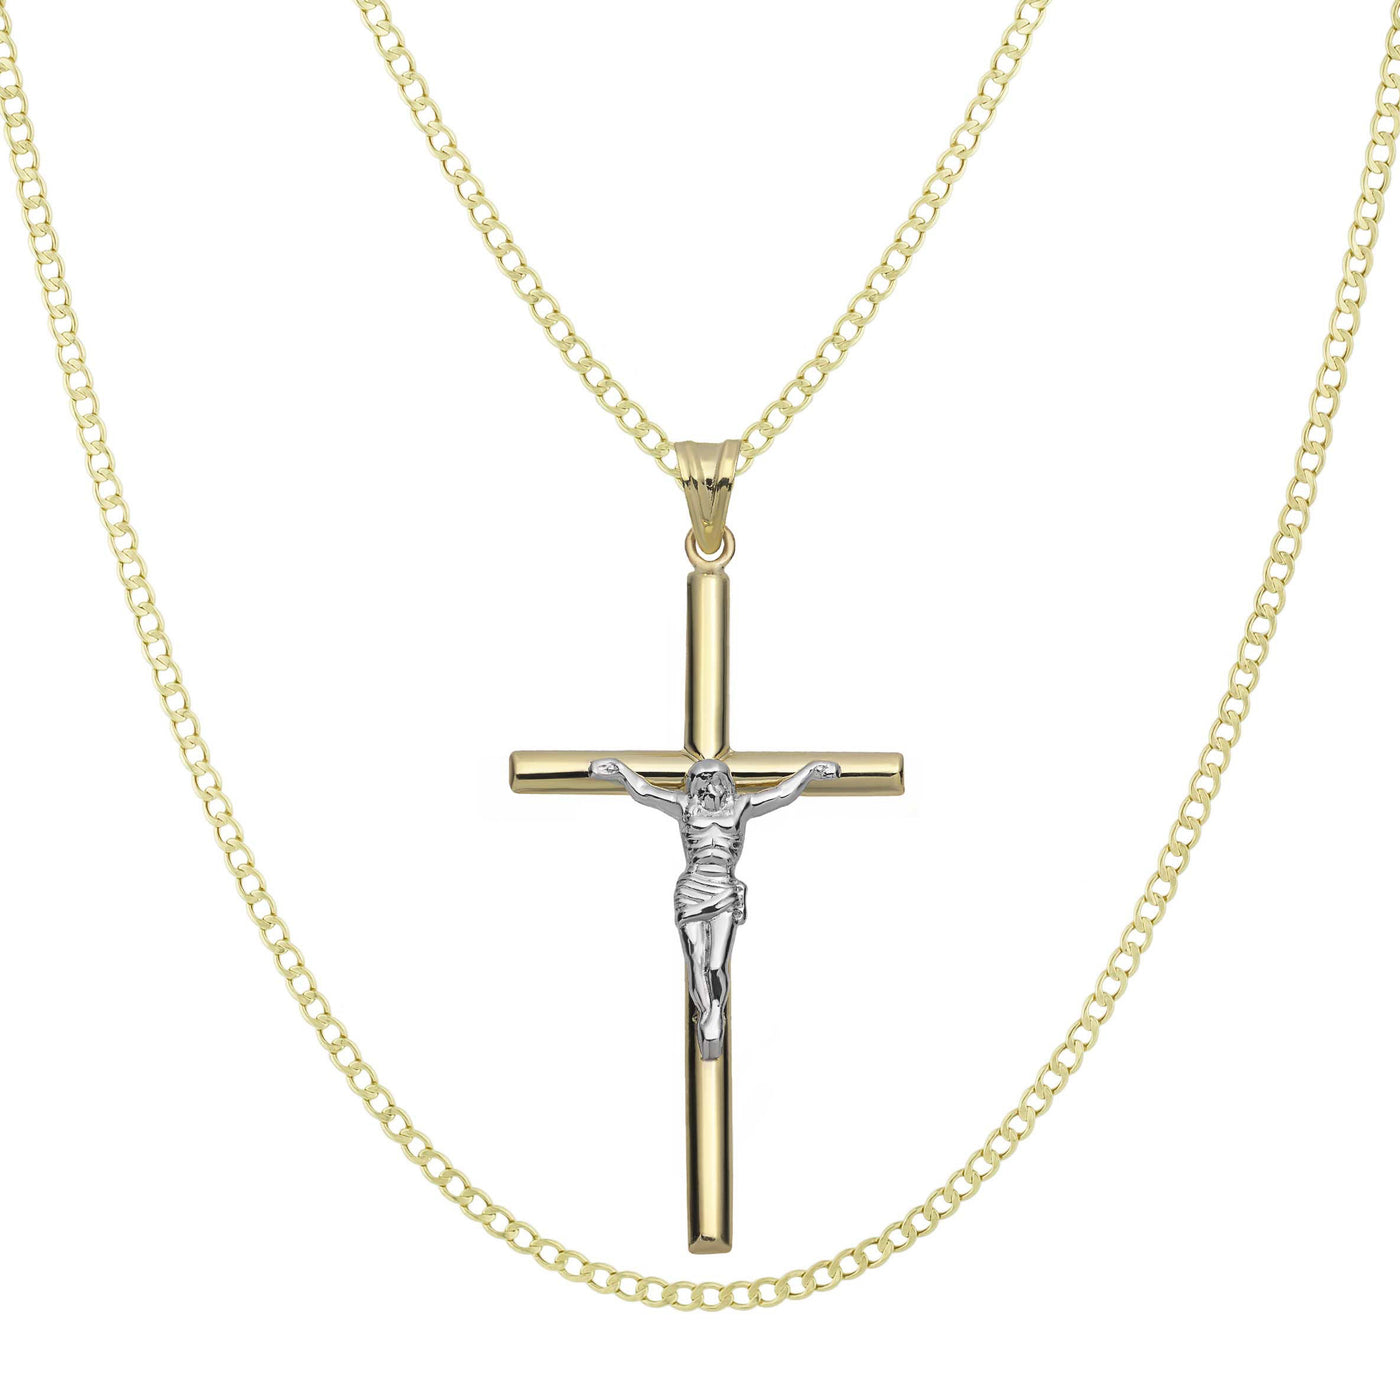 2 1/4" Jesus Cross Crucifix Pendant & Chain Necklace Set 14K Yellow White Gold